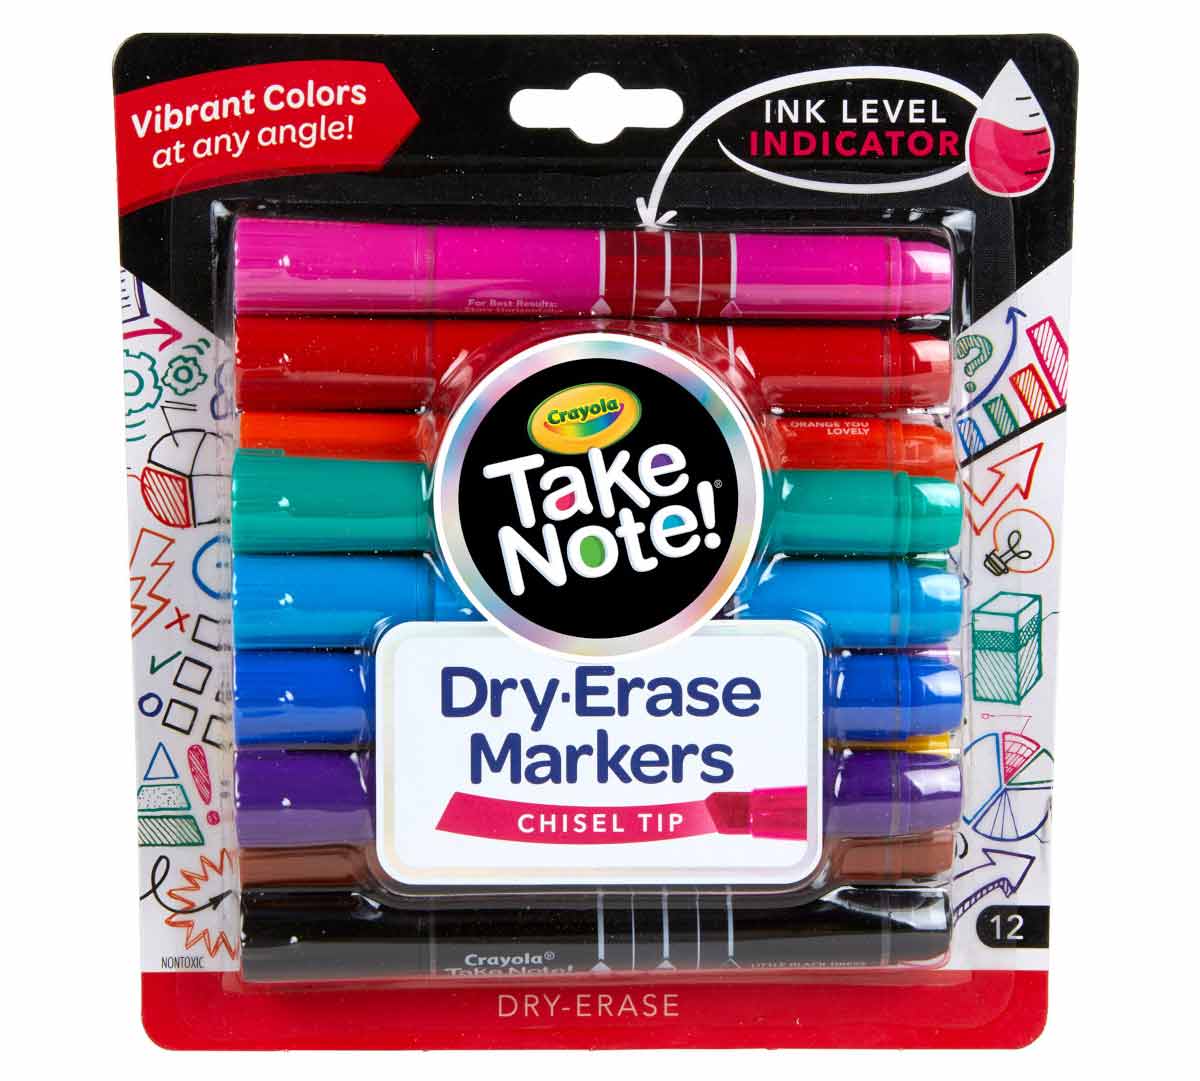 https://shop.crayola.com/on/demandware.static/-/Sites-crayola-storefront/default/dw8b5251c7/images/58-6545_Take-Note_Dry-Erase-Markers_12ct_PDP_MAIN.jpg